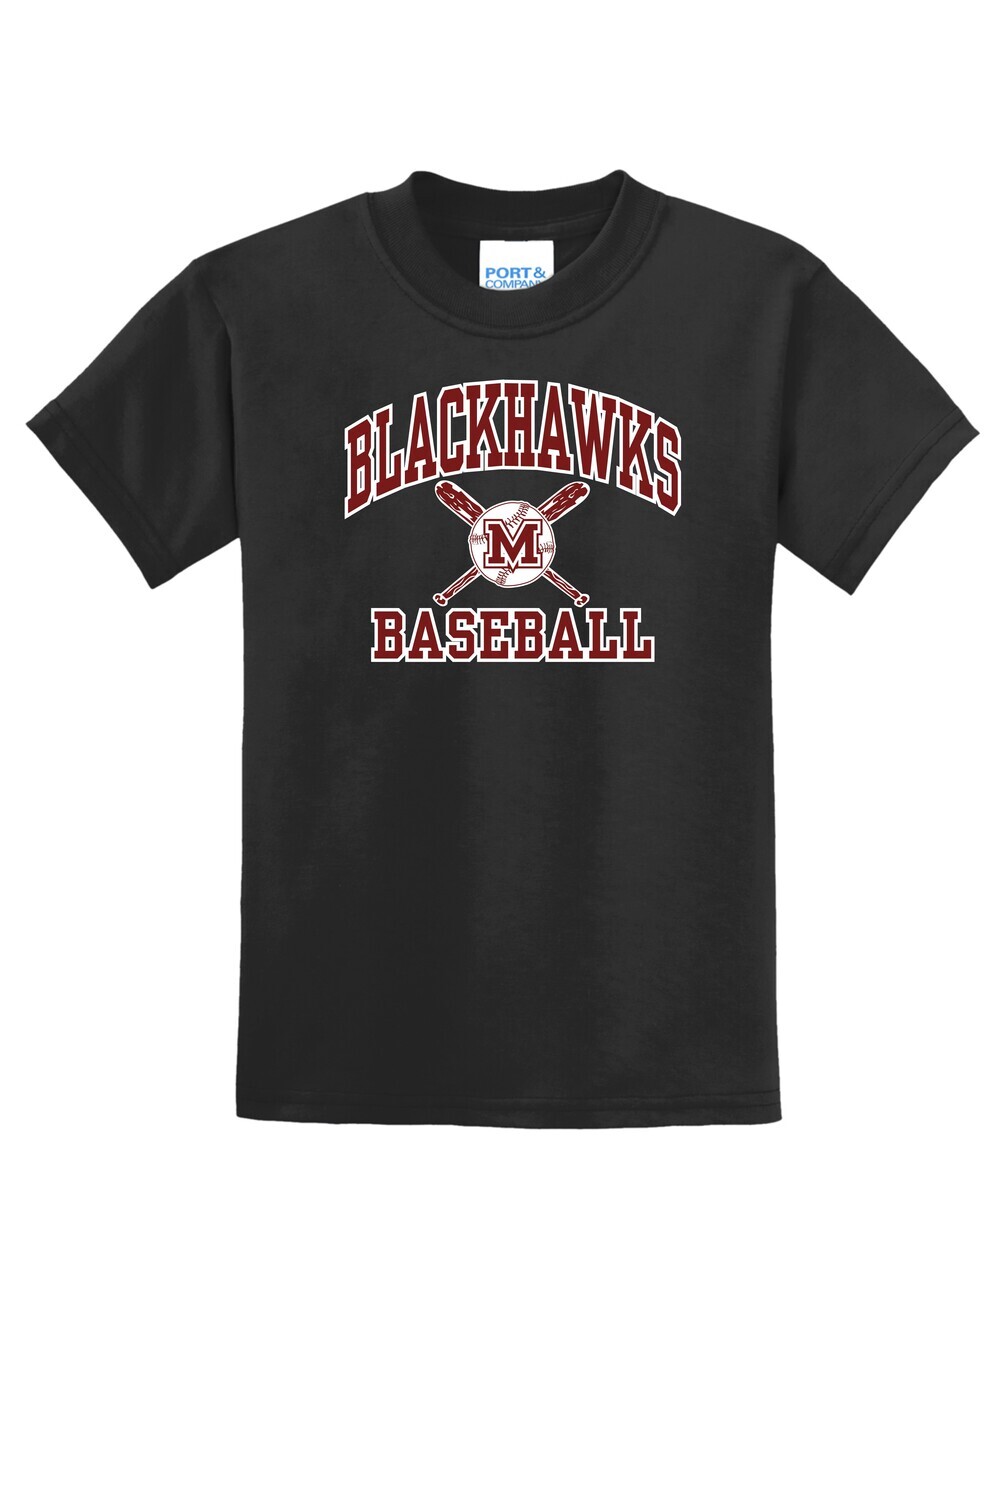 Moline Blackhawks Crossed Bats Logo 50/50 Blend Youth T-shirt